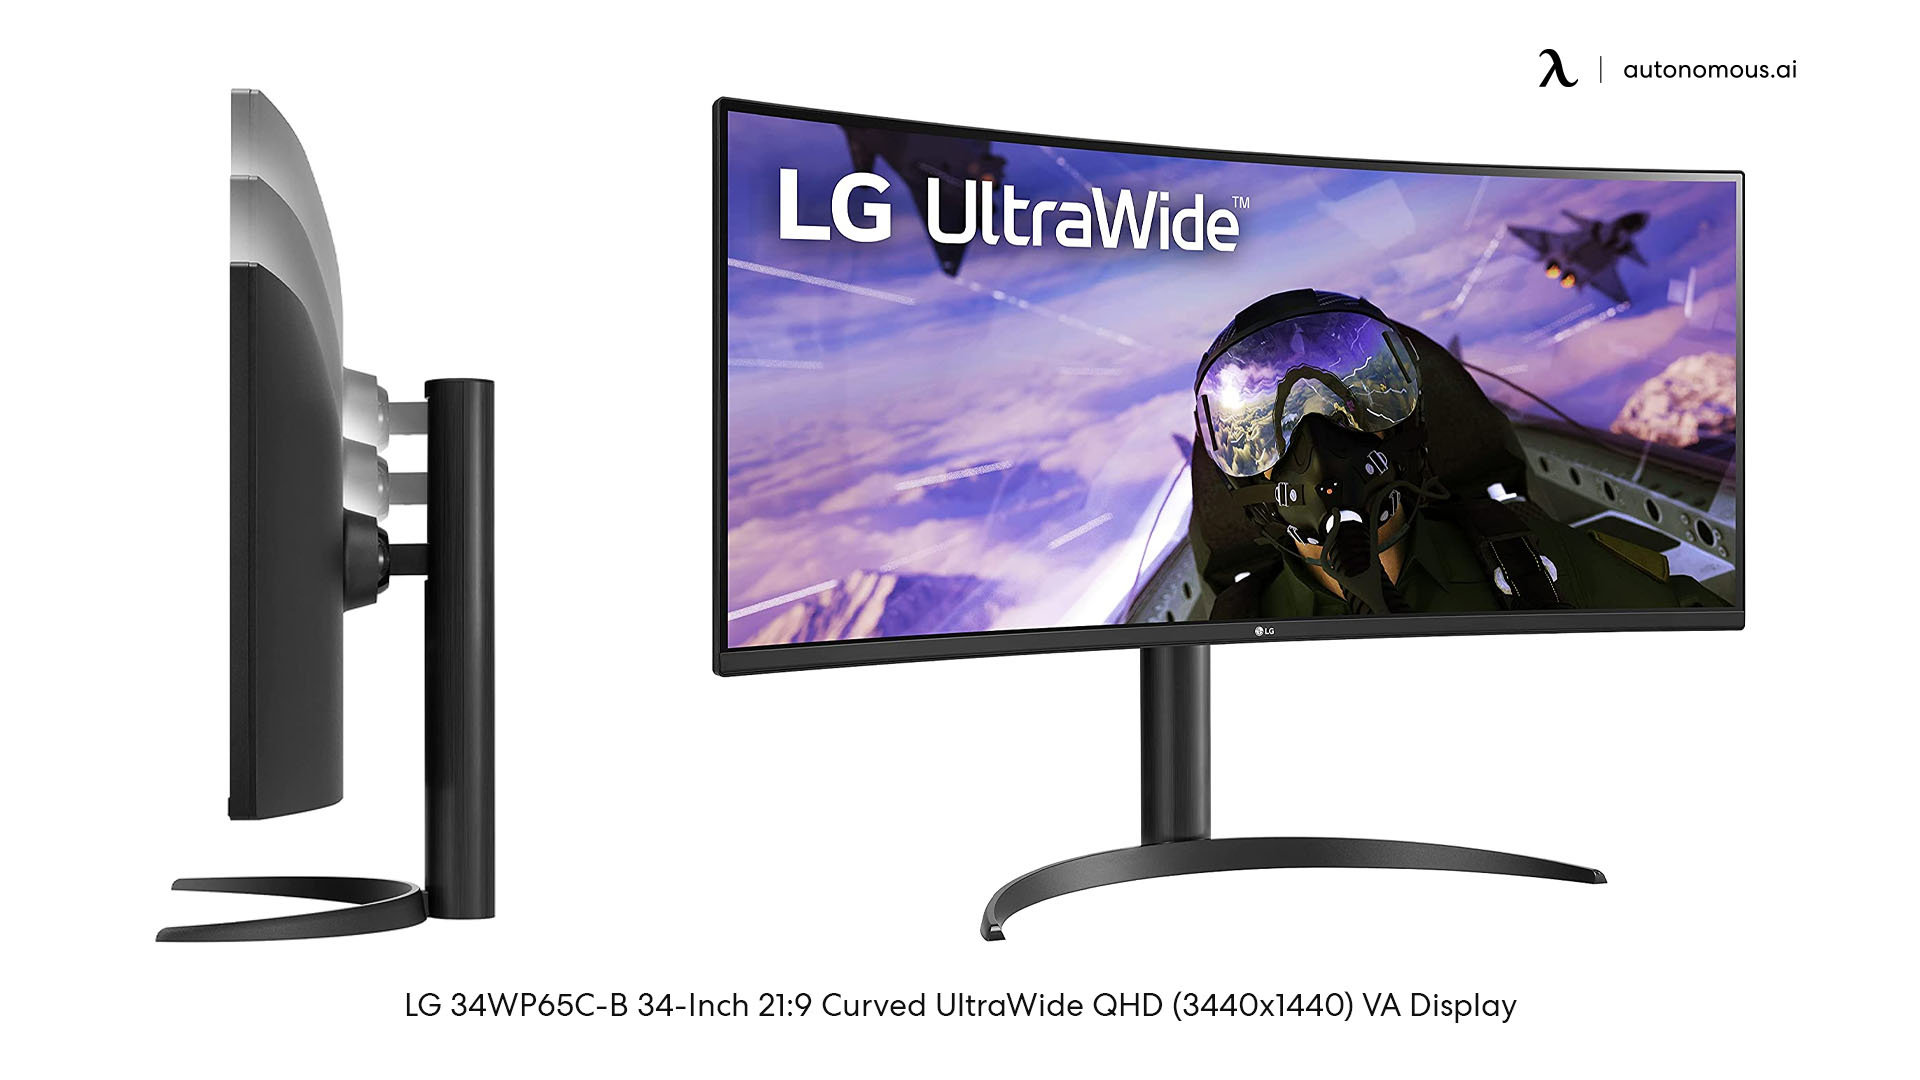 LG’s 34-Inch WQHD (3440x1440) WQHD gaming monitor